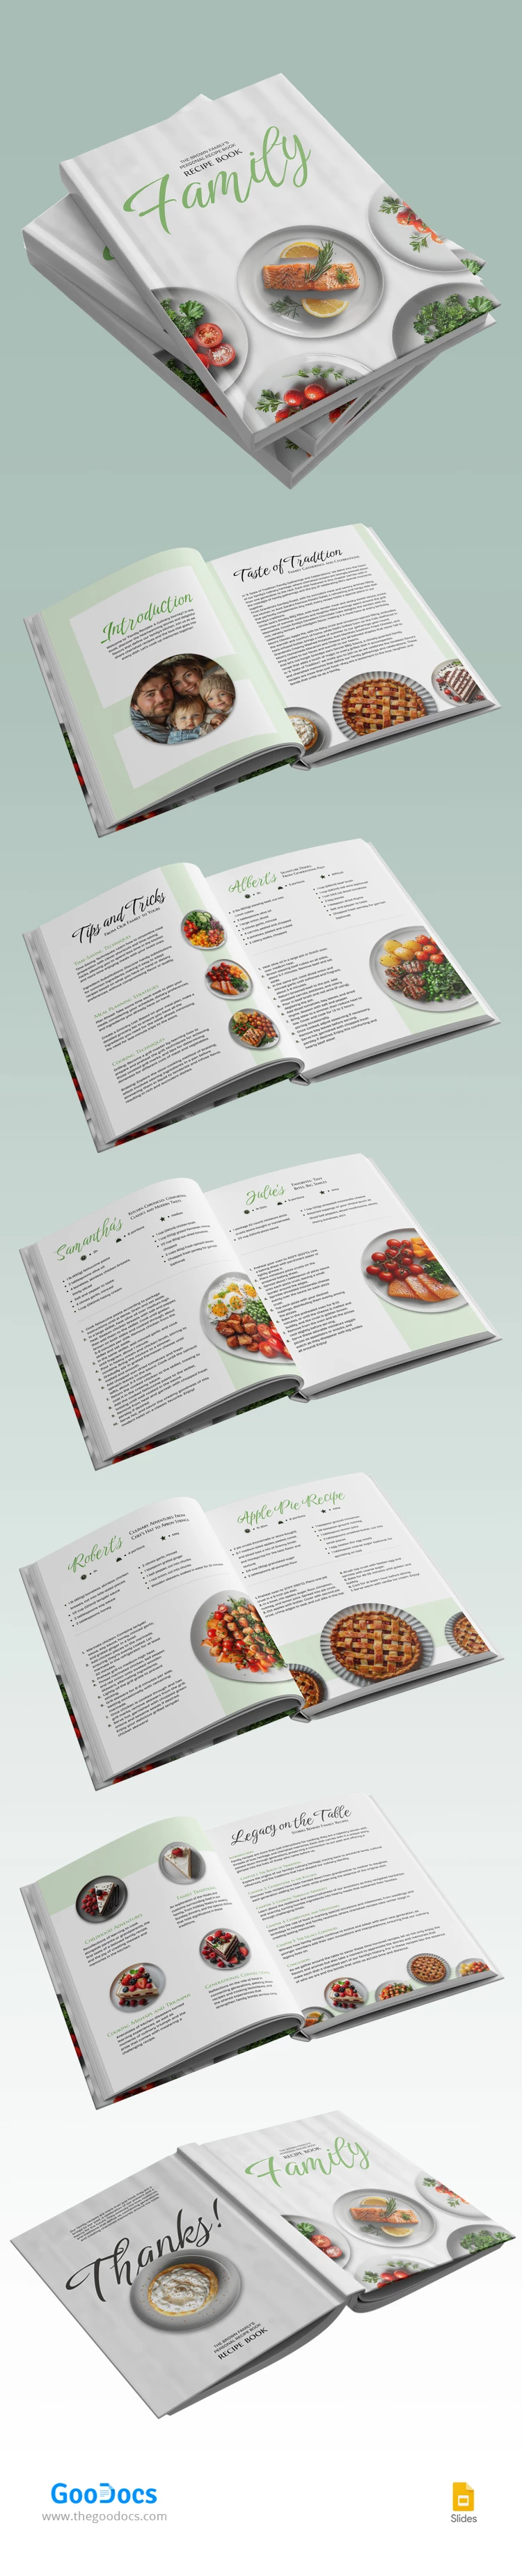 Family Recipes Ebook - free Google Docs Template - 10068407